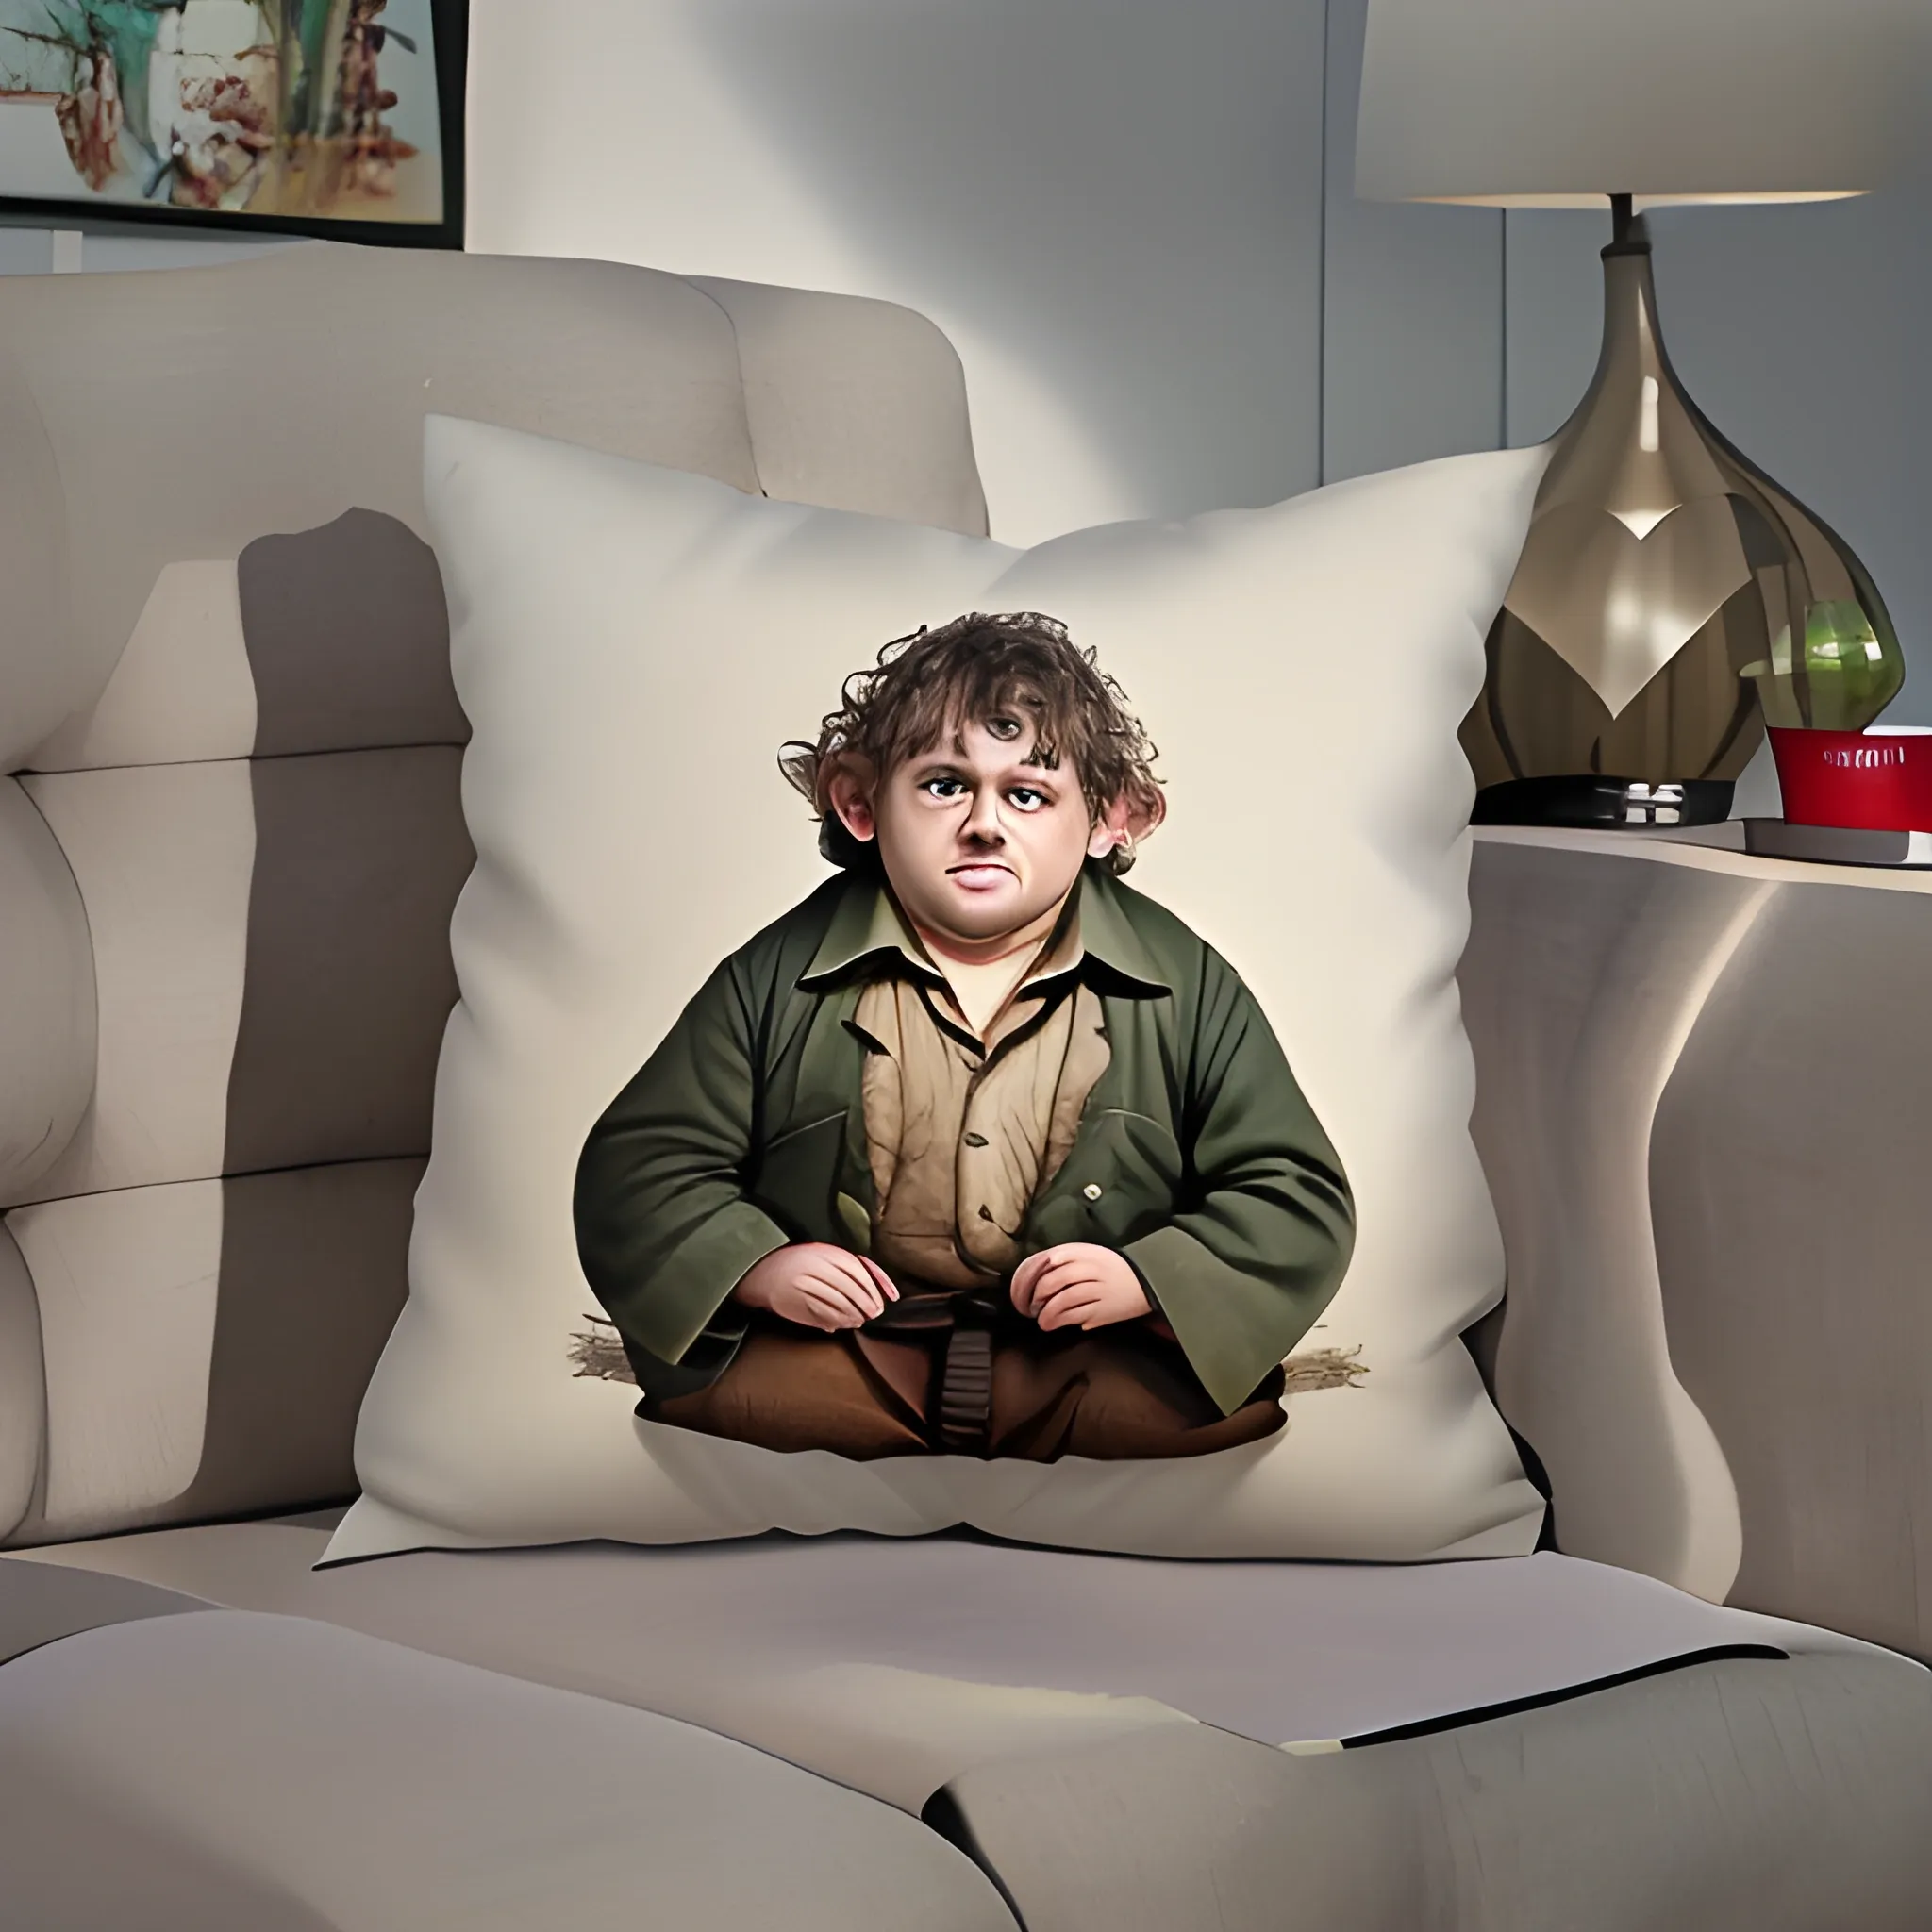 Grumpy Australian hobbit with a very expensive pillow